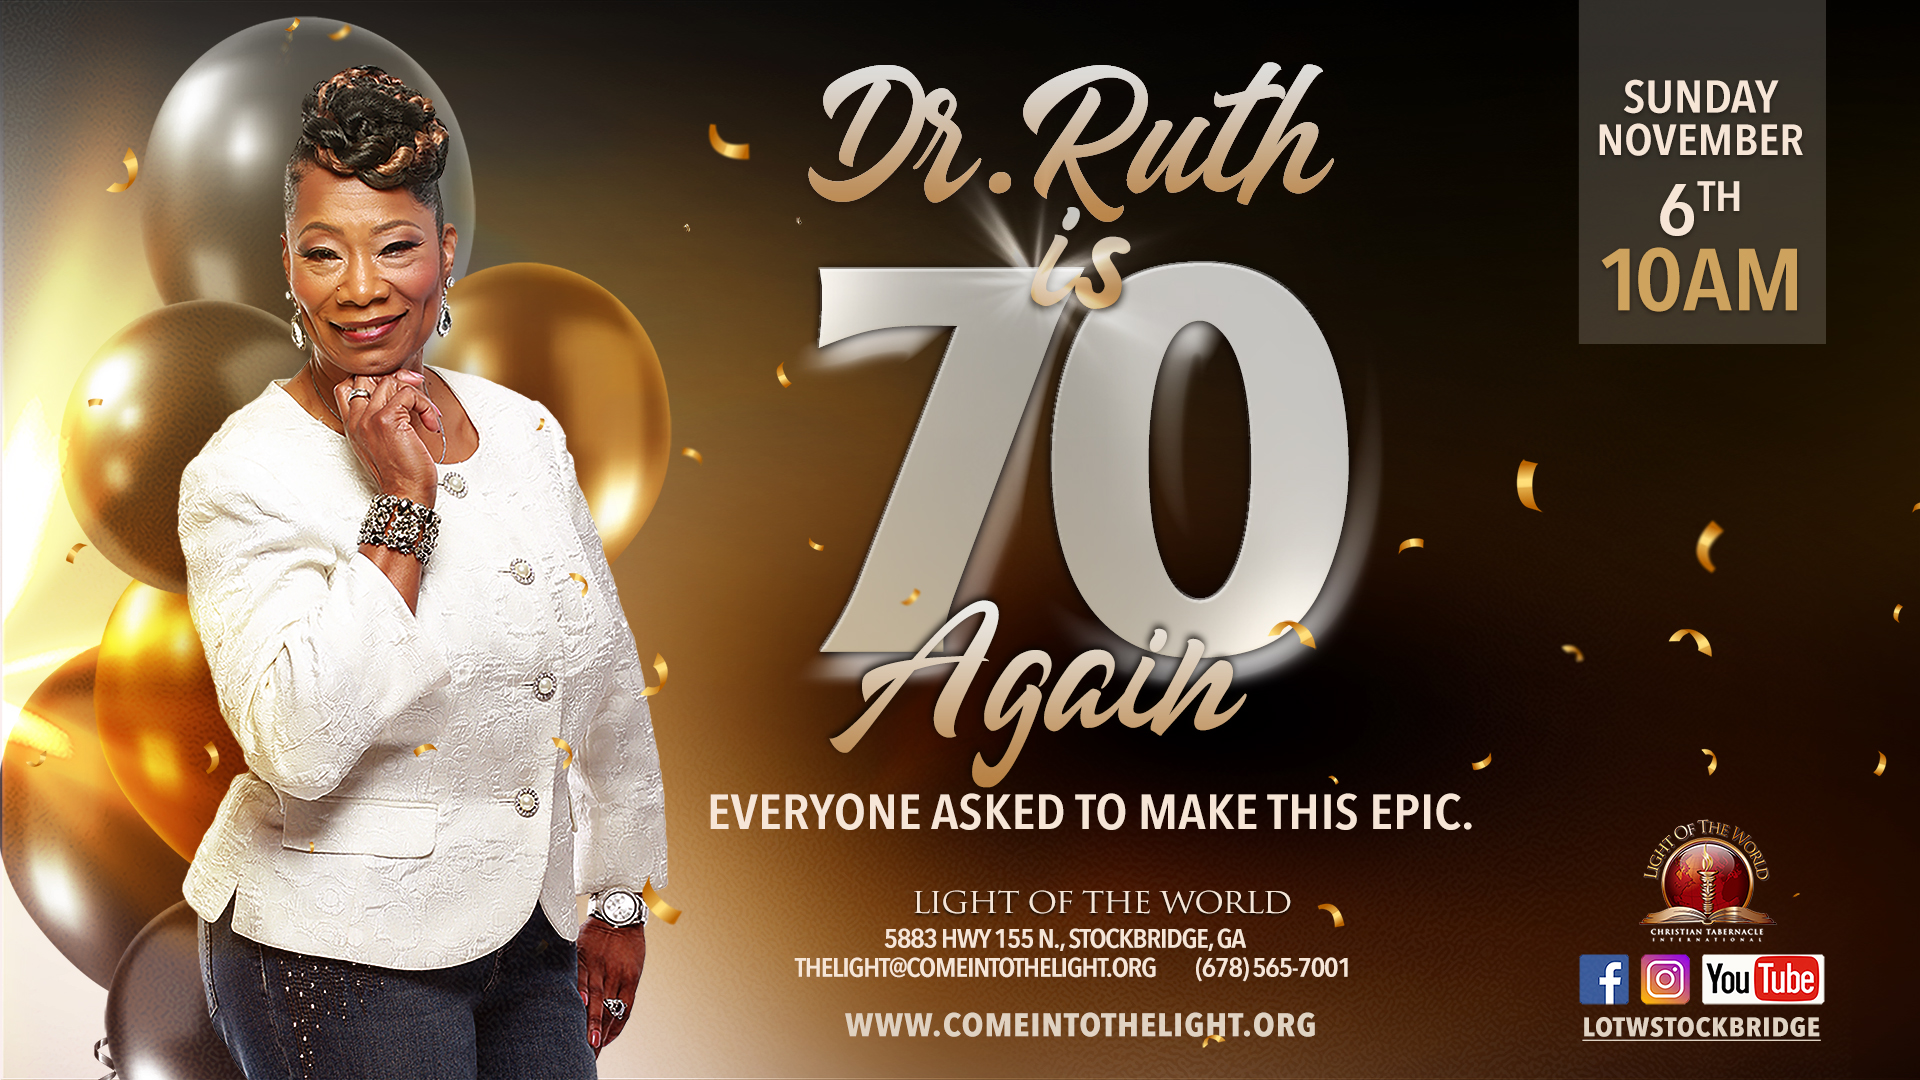 Bishop Ruth's 70th birthday flyer